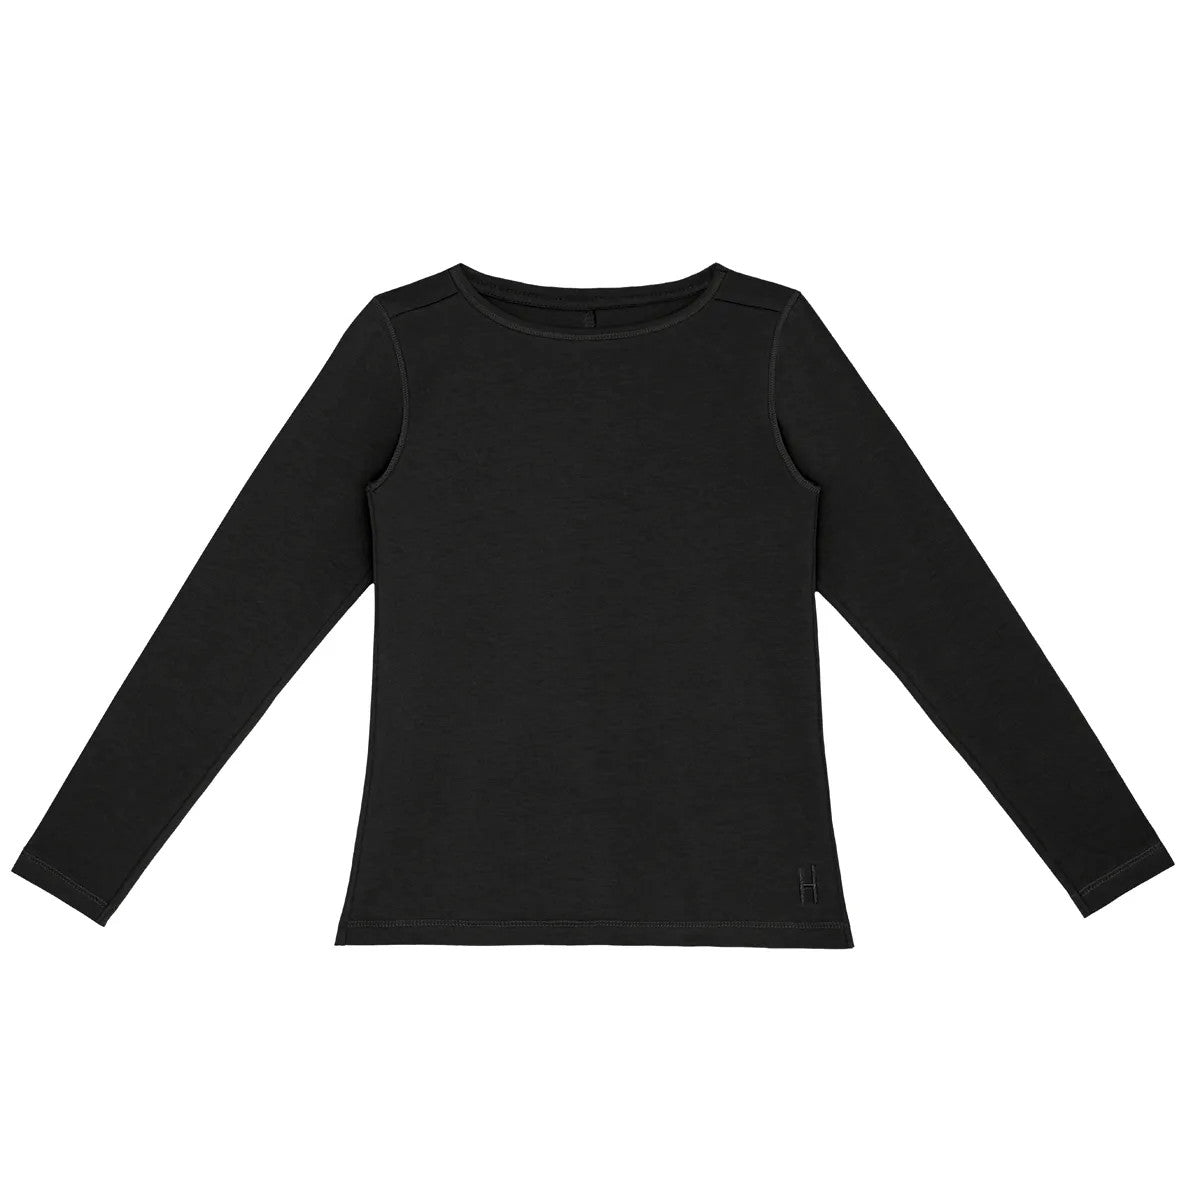 Little Hedonist trans-seasonal unisex organic cotton longsleeve shirt in black